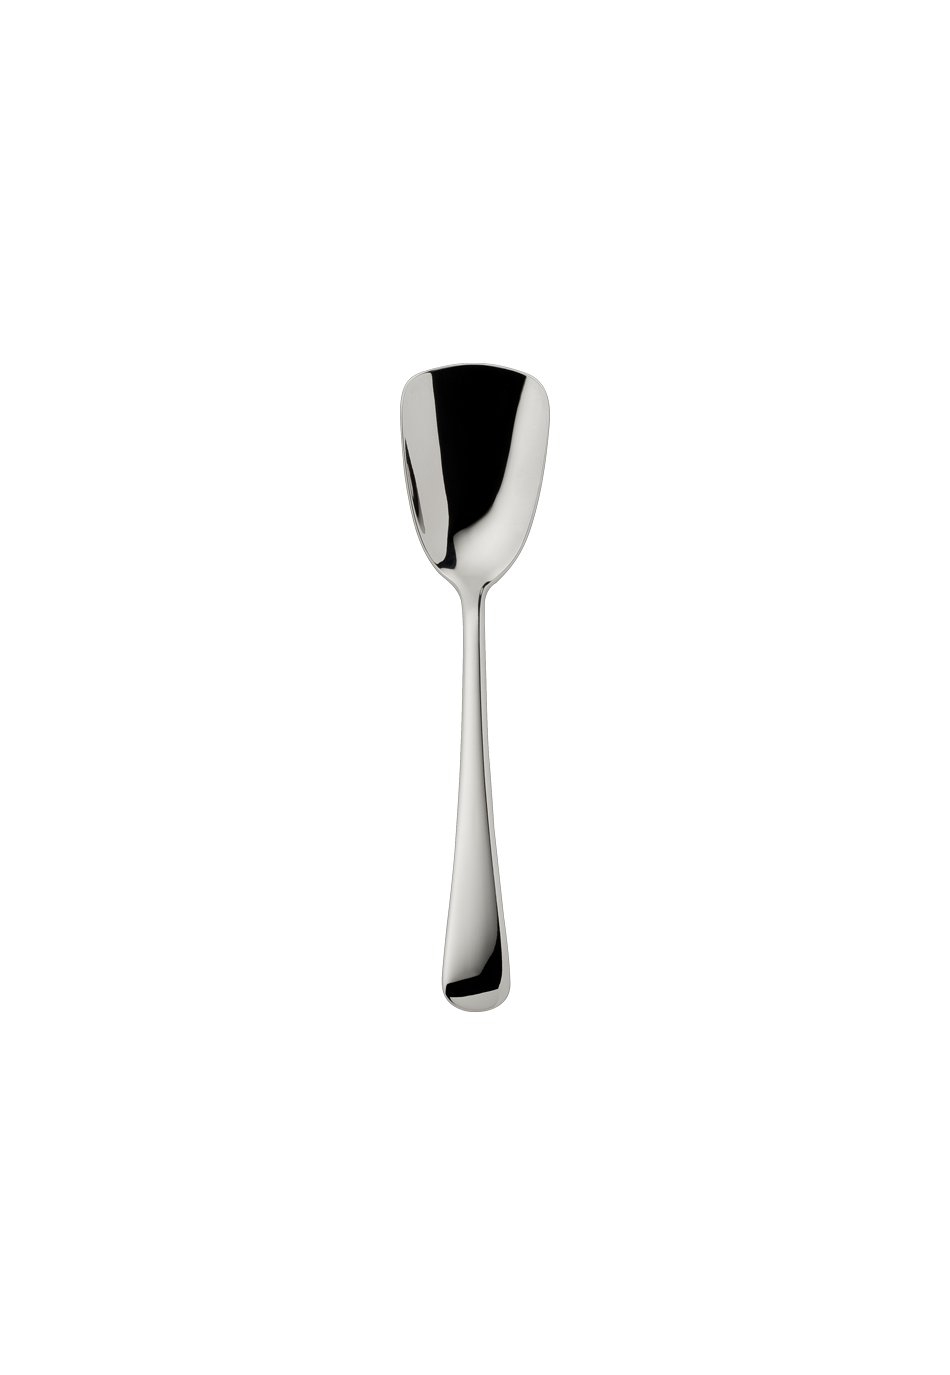 Como Sugar Spoon (18/8 stainless steel)